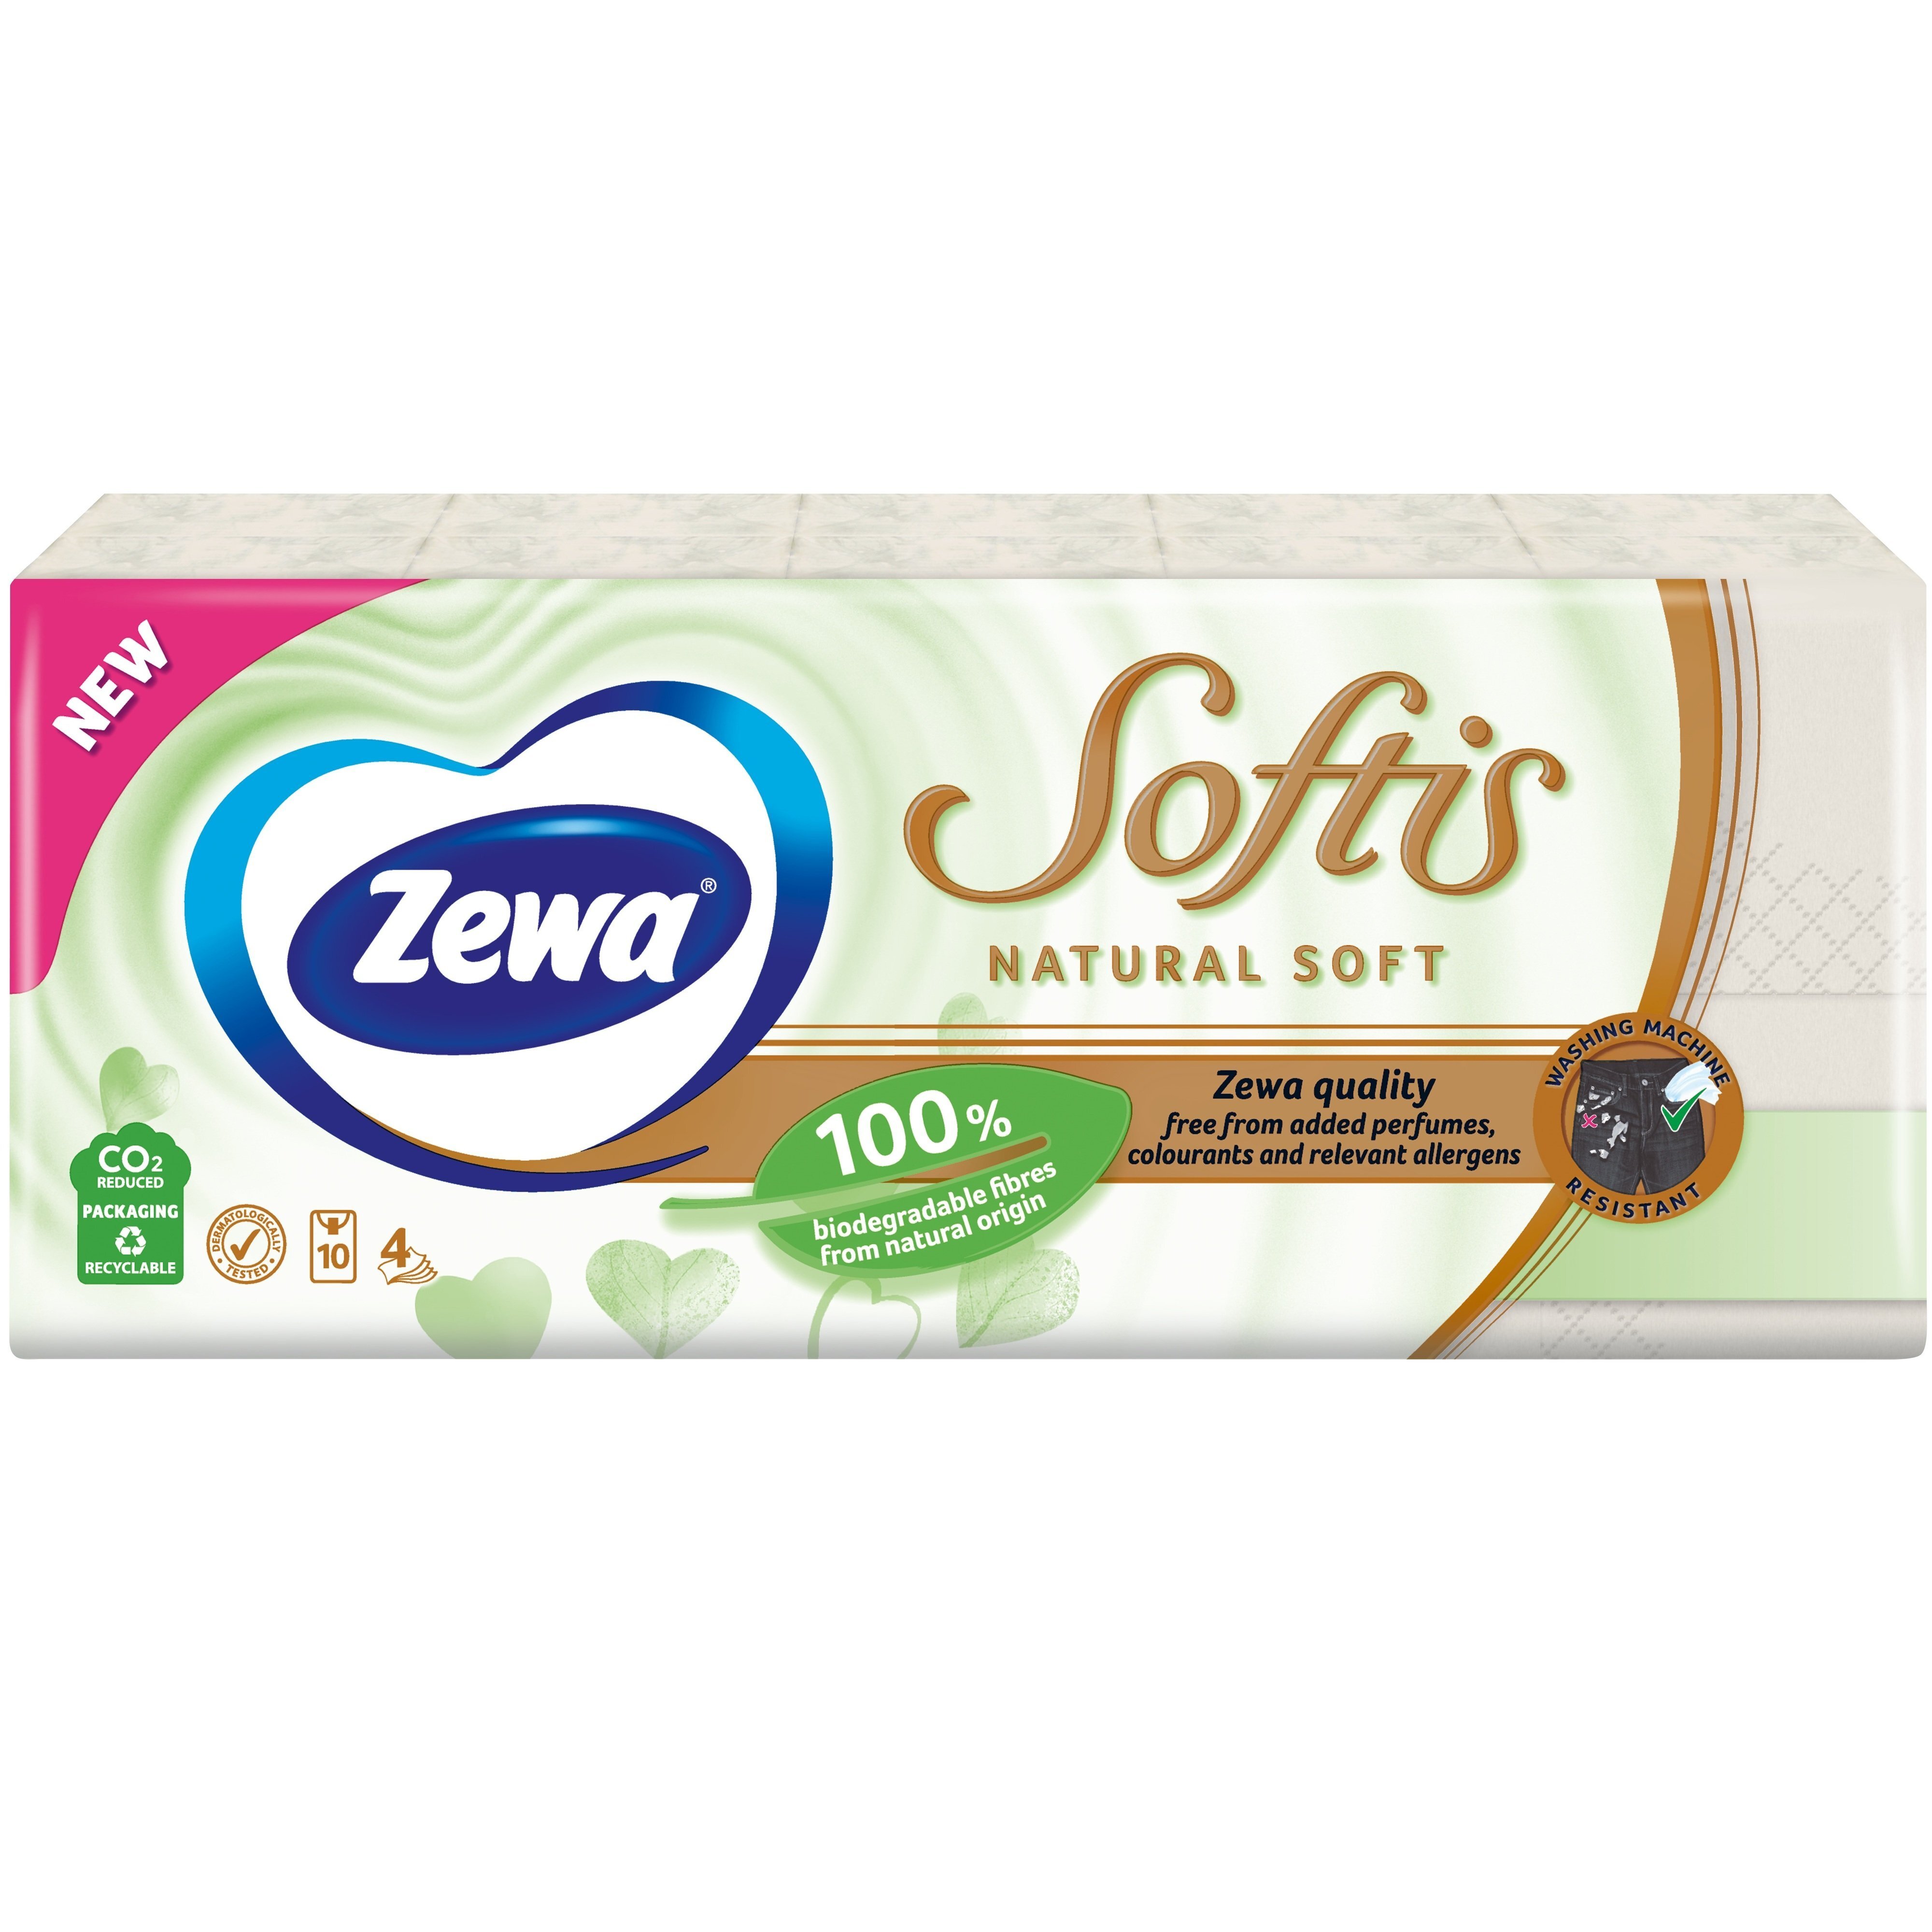 Носовые платочки Zewa Softis Natural Soft 10x9 шт фото 1